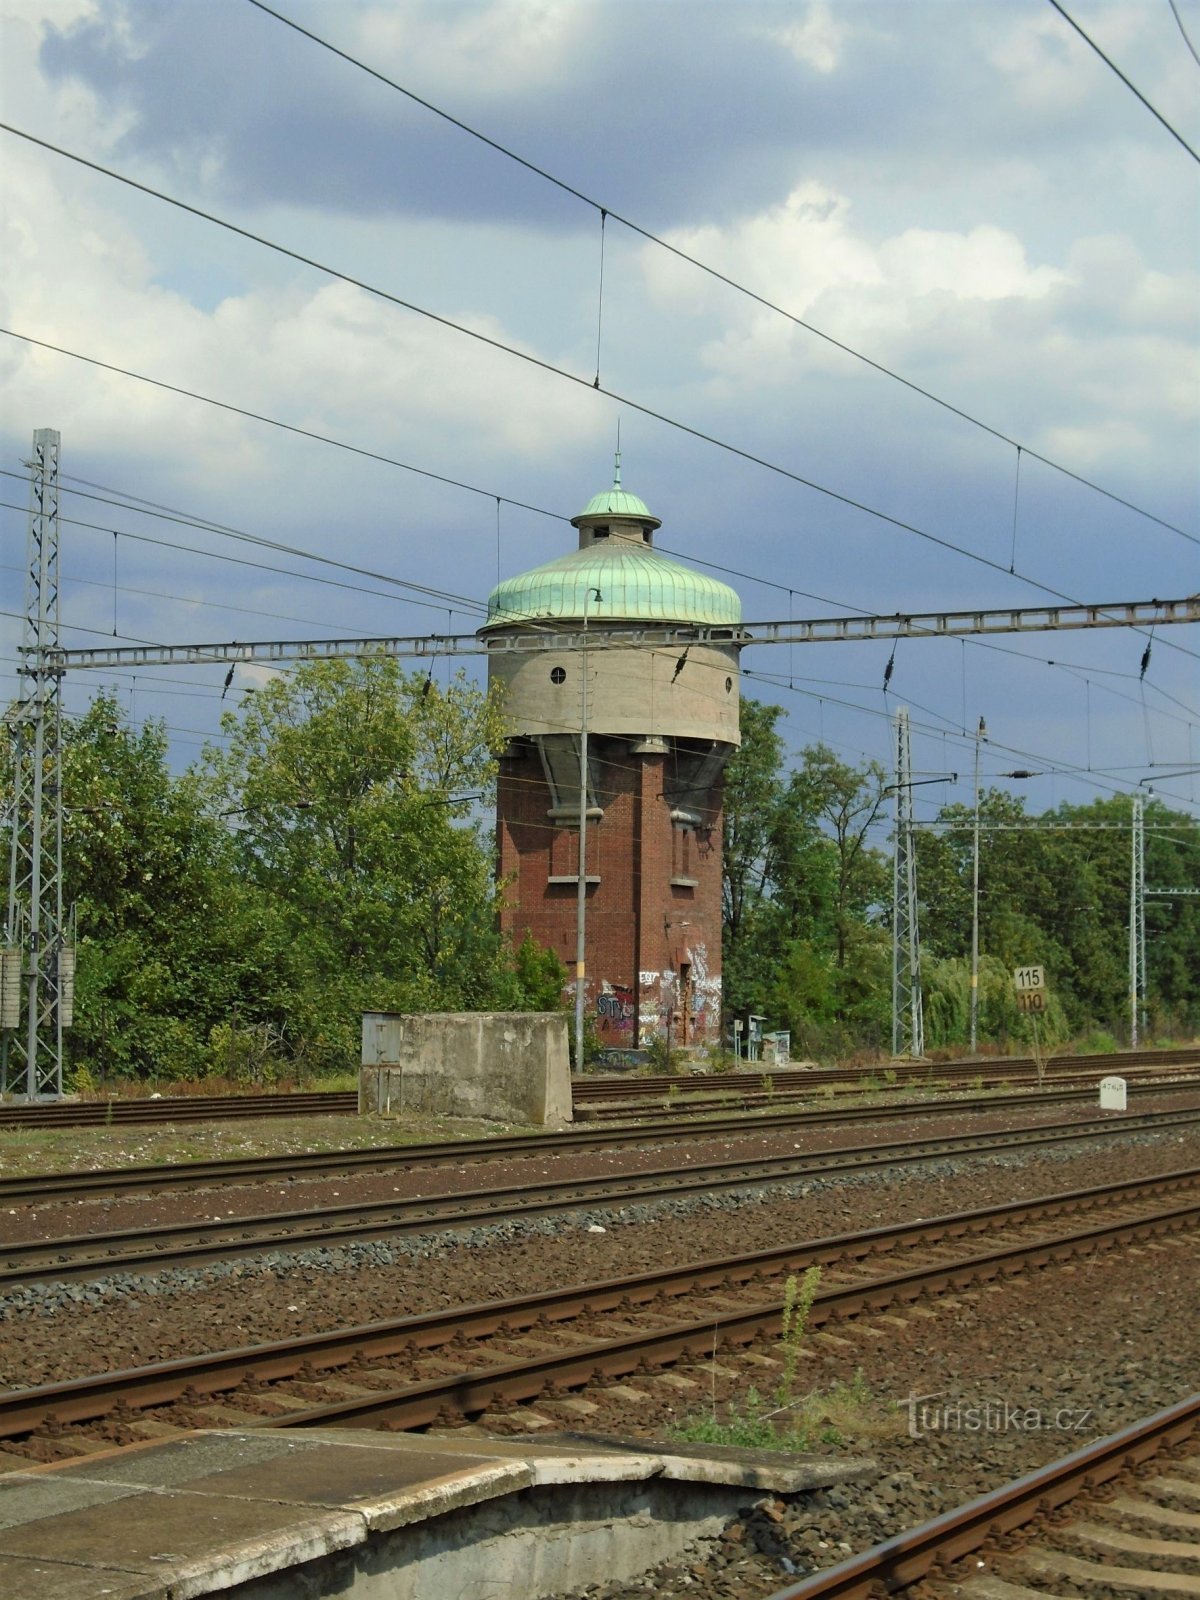 Stausee Bahnhofsturm (Roudnice nad Labem, 23.7.2018)